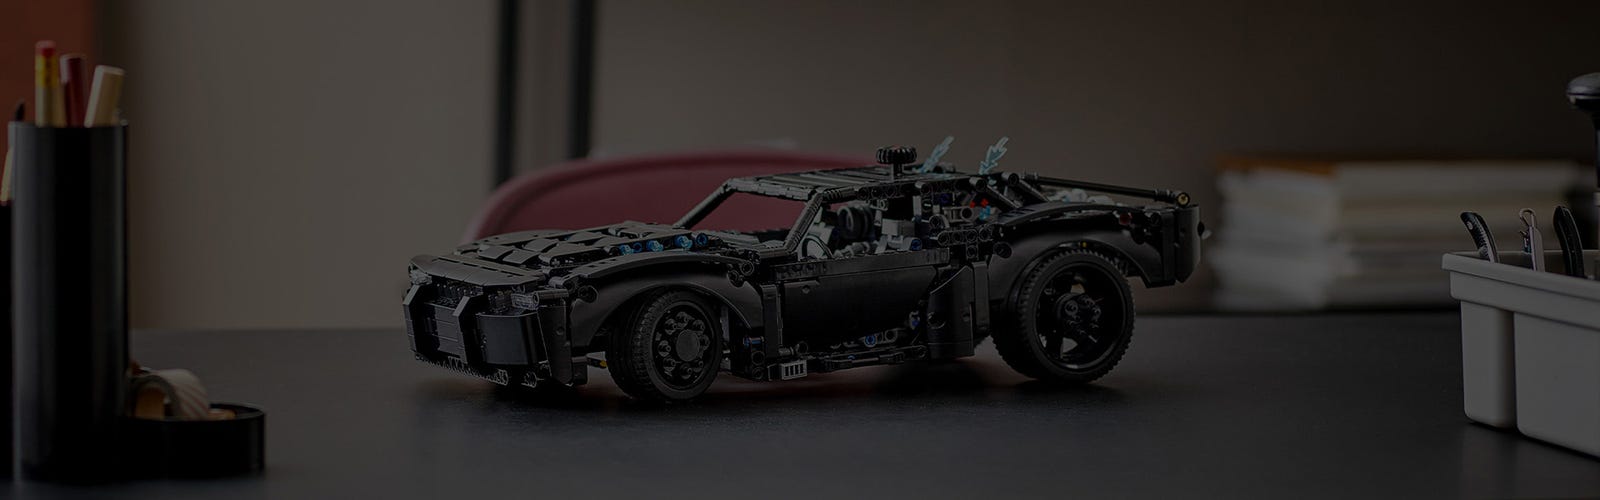 Review: 42127-1 – The Batman – Batmobile